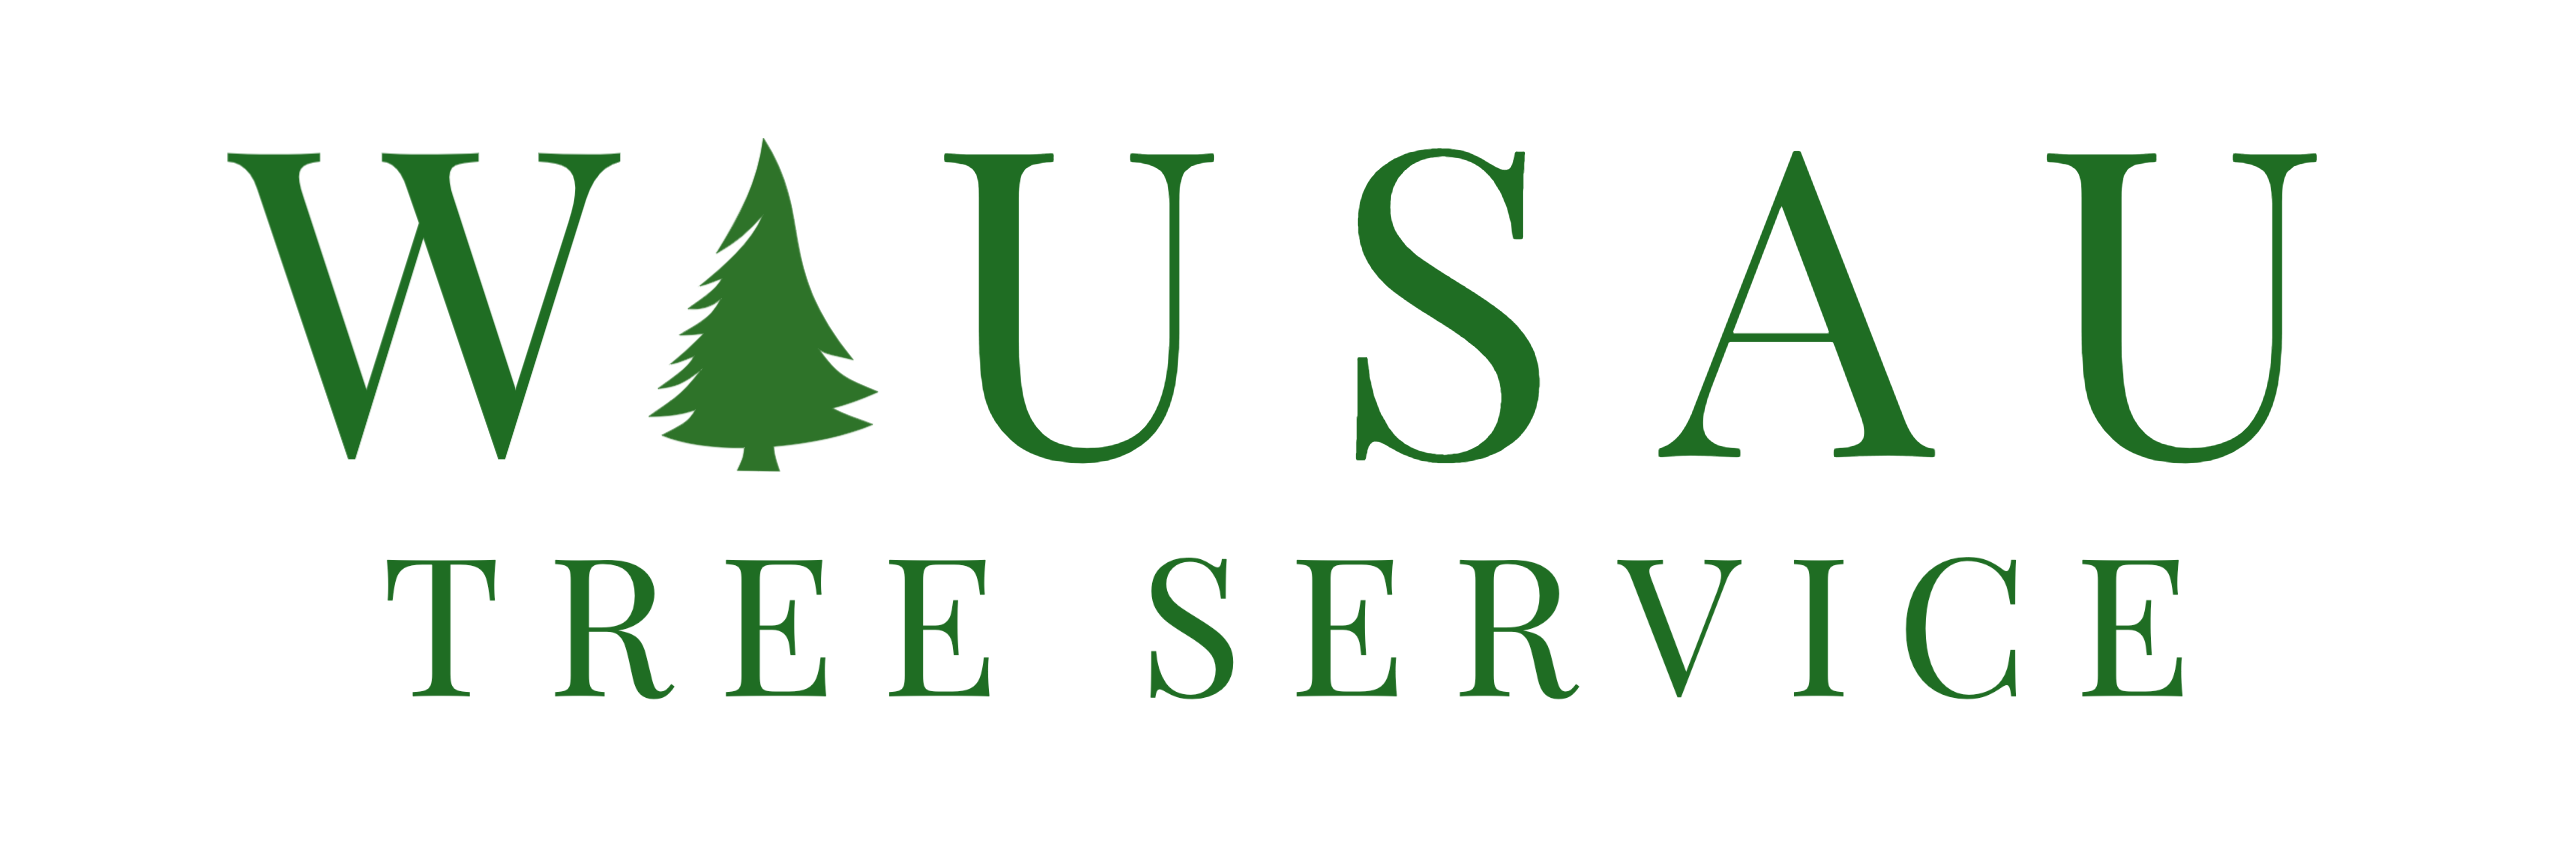 Wausau tree service